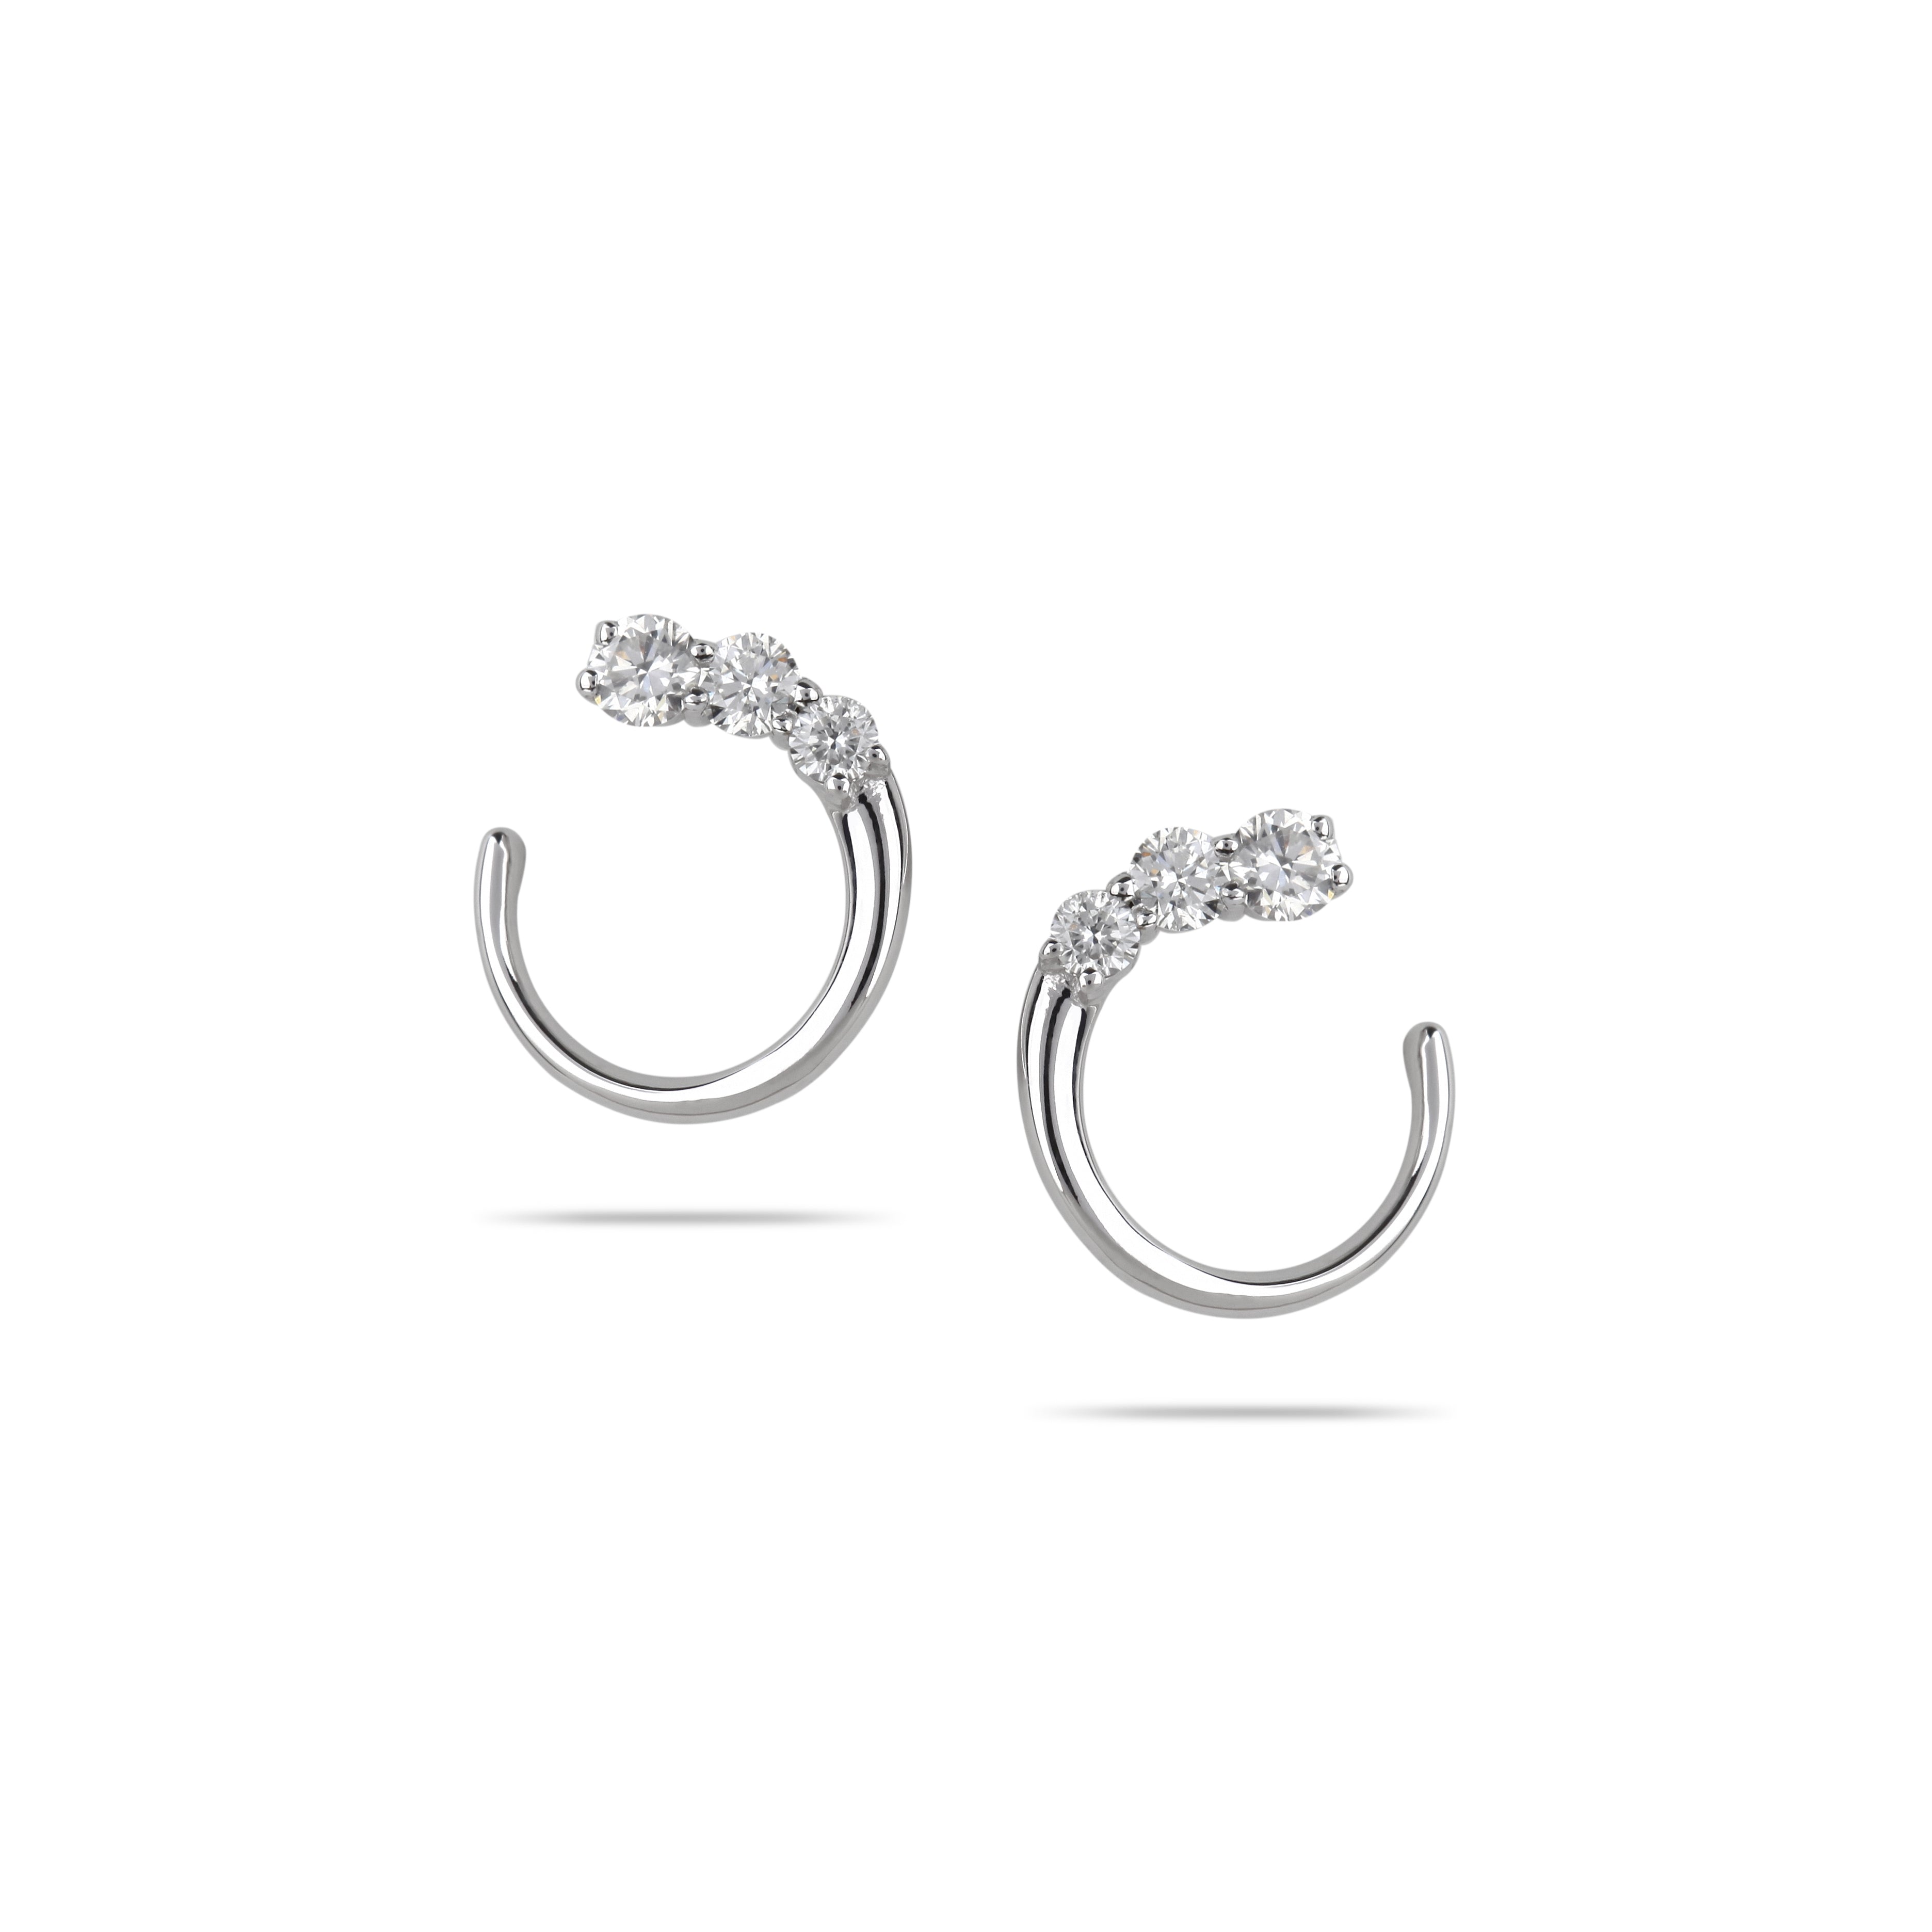 Buy Hoop Crystal Earrings Earrings Online Cheap, Shop From The Latest  Collection Of Earrings For Women & Girls Online. Buy Studs, Ear Cuff, Drop  & More Earrings At Best Price | Ishhaara